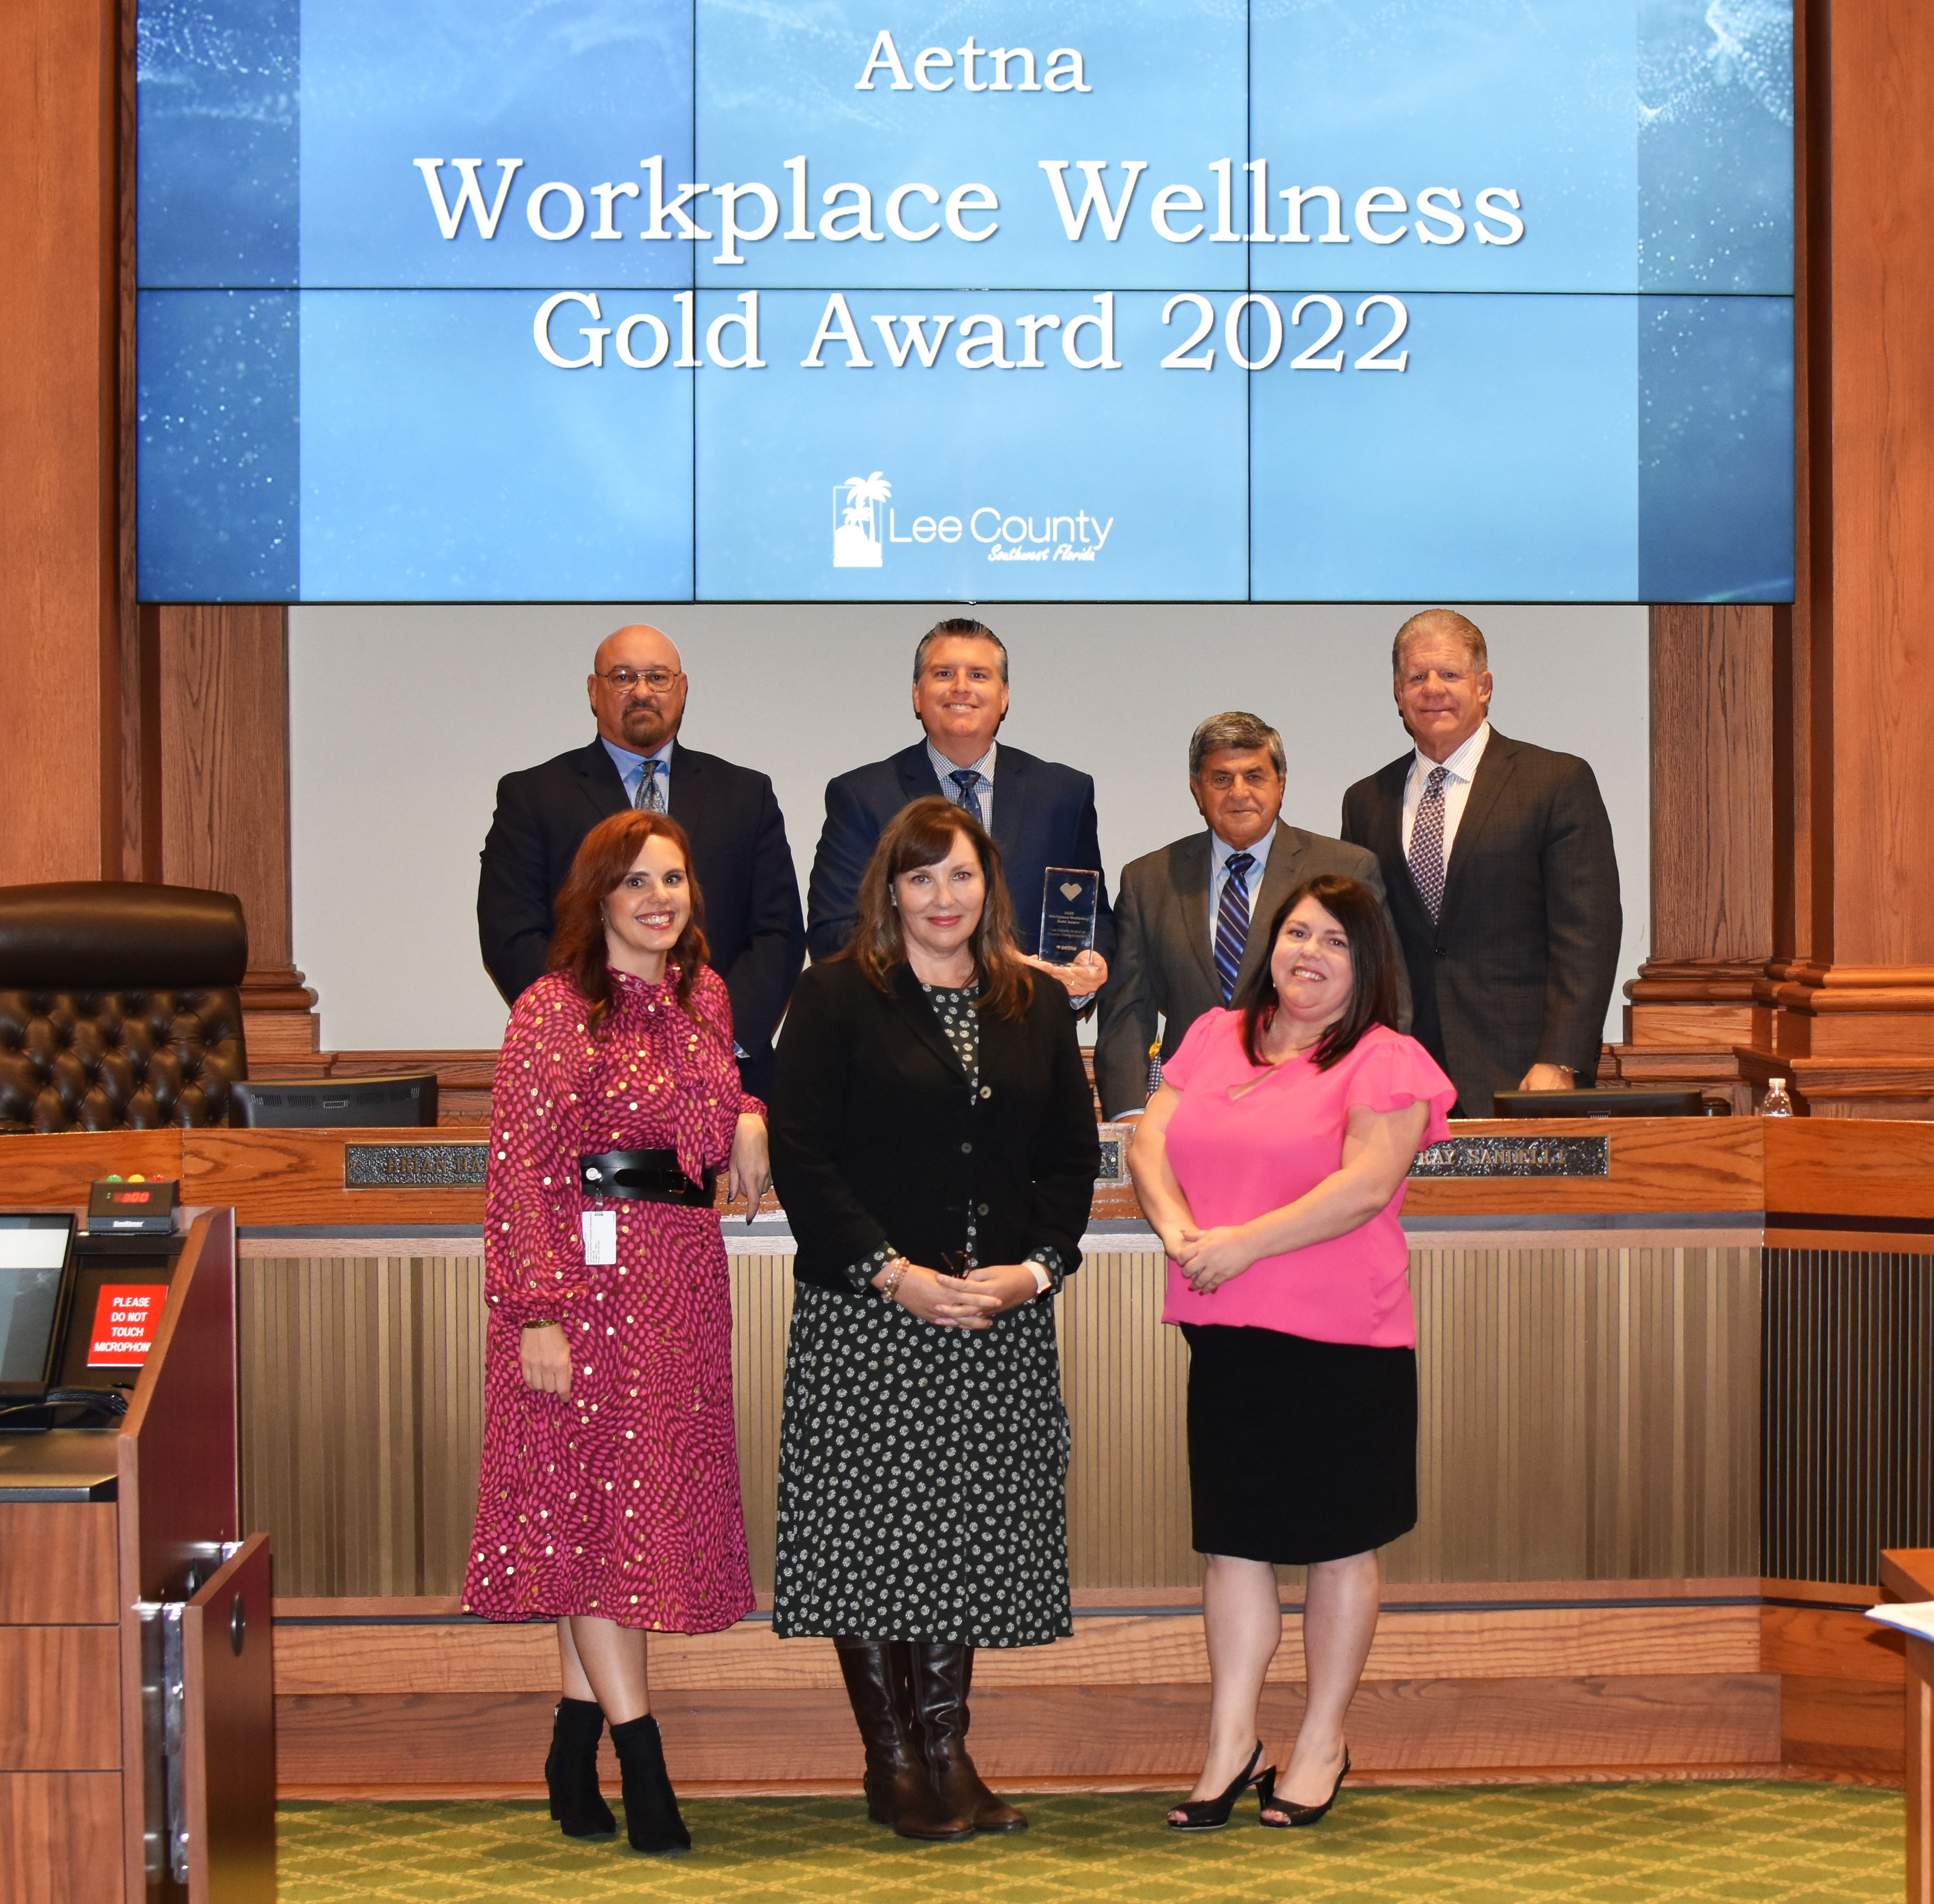 12-06-22 Aetna Gold Workplace Wellness Award